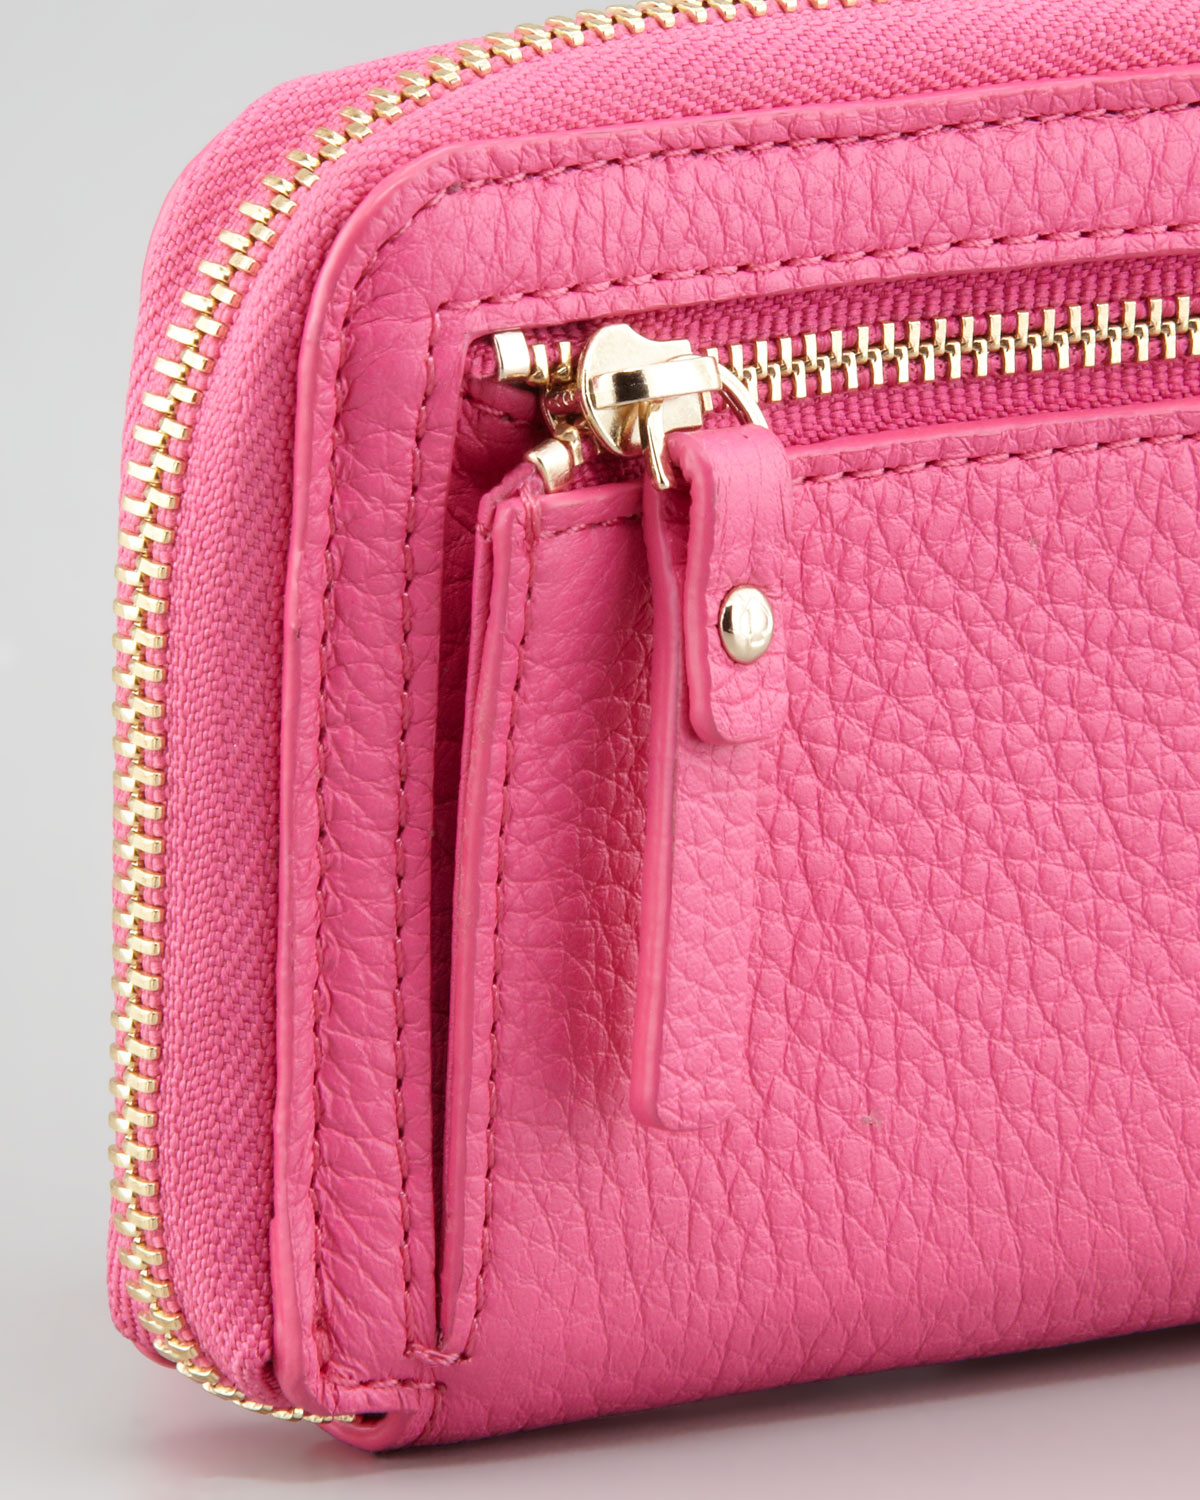 Kate spade new york Louis Phone Wristlet Wallet in Pink | Lyst